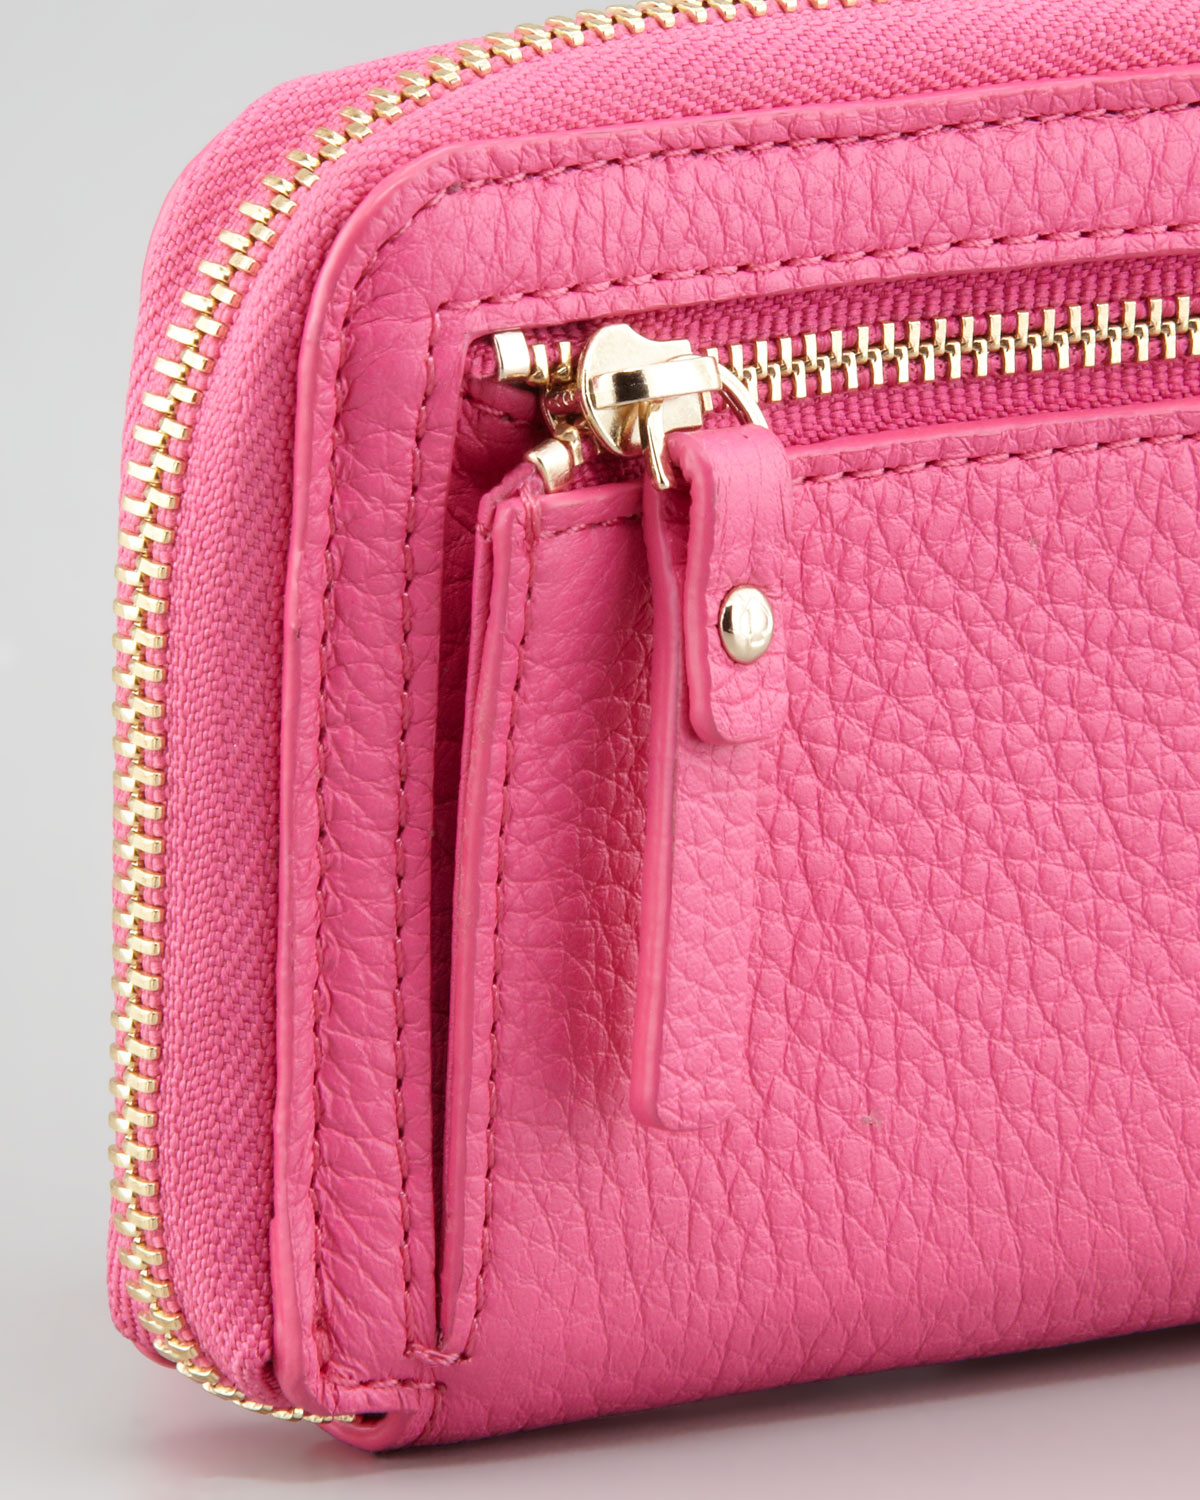 Kate spade new york Louis Phone Wristlet Wallet in Pink | Lyst